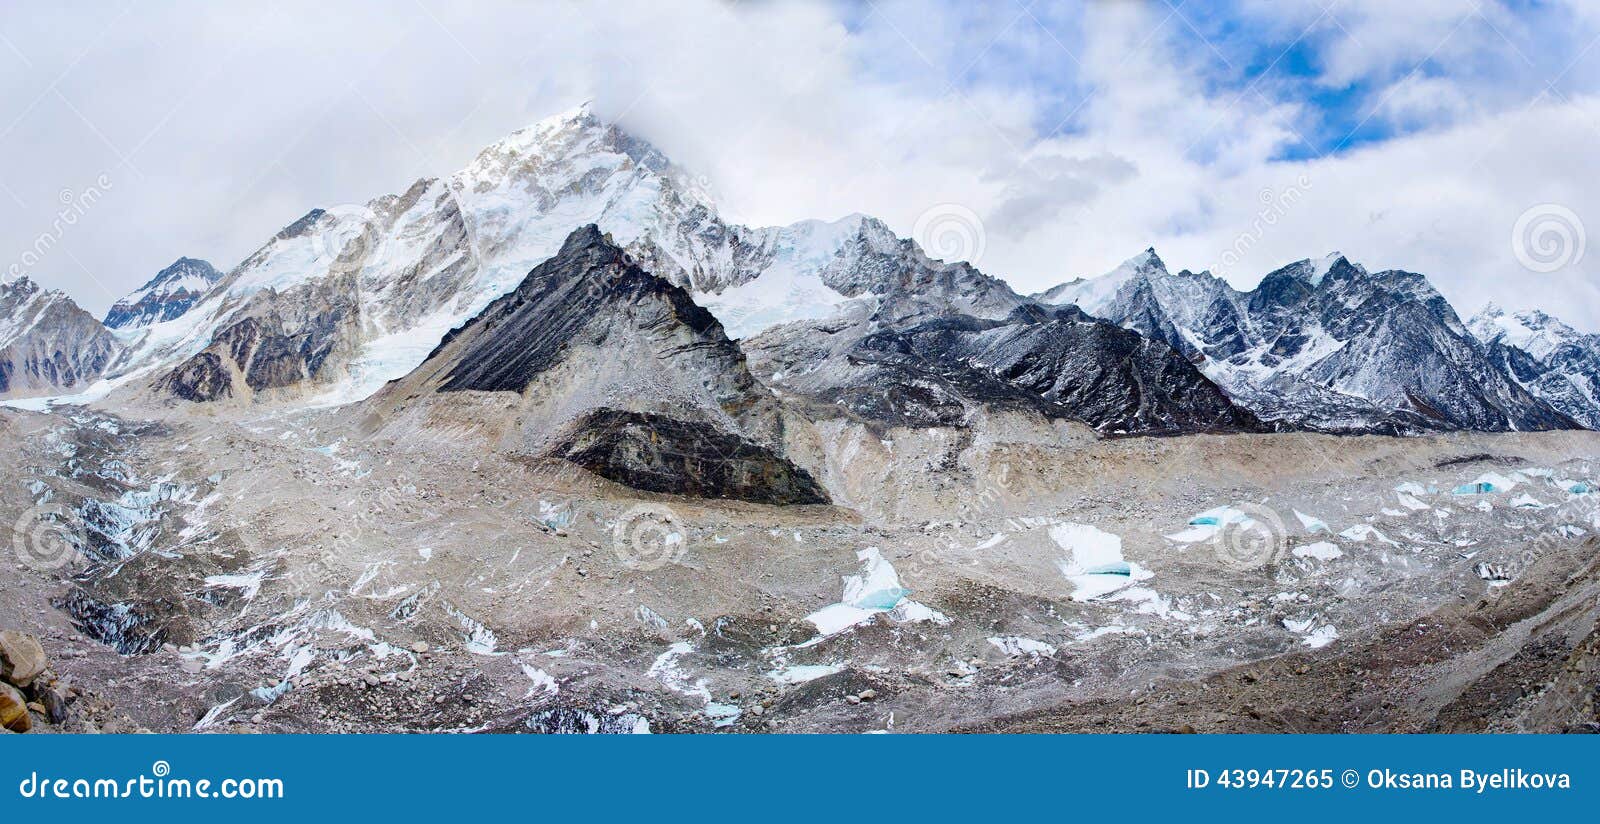 khumbu glacier in himalayas,nepal